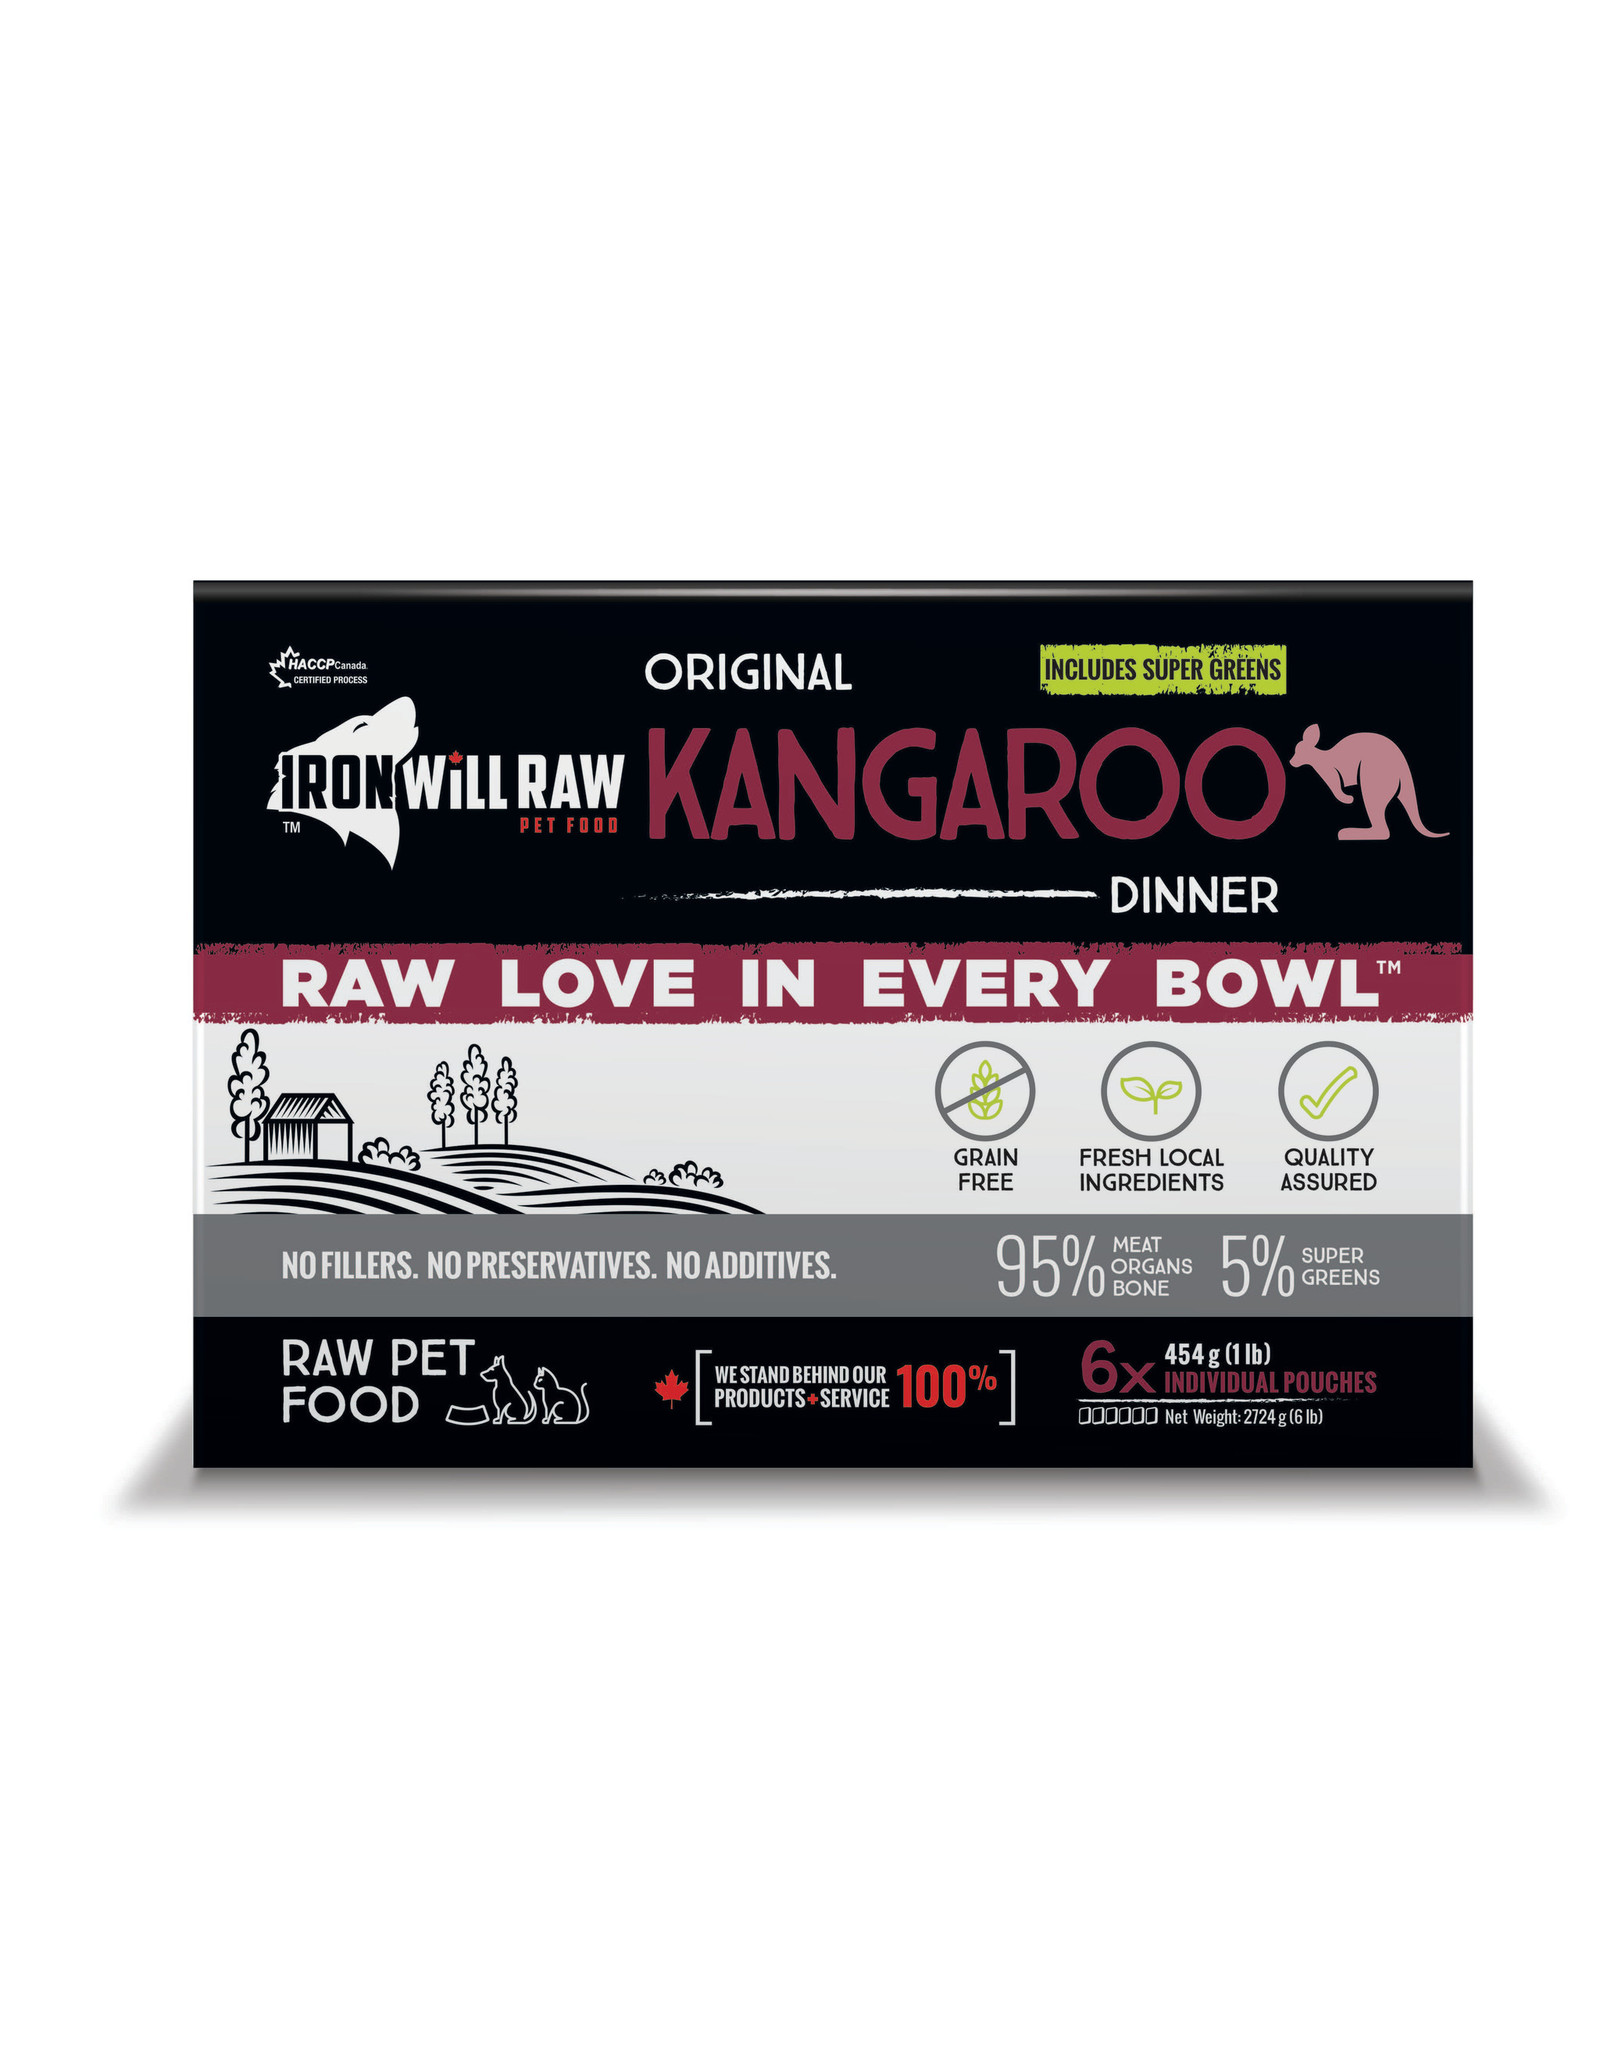 Iron Will Raw Iron Will Original Kangaroo Dinner 6lb Box